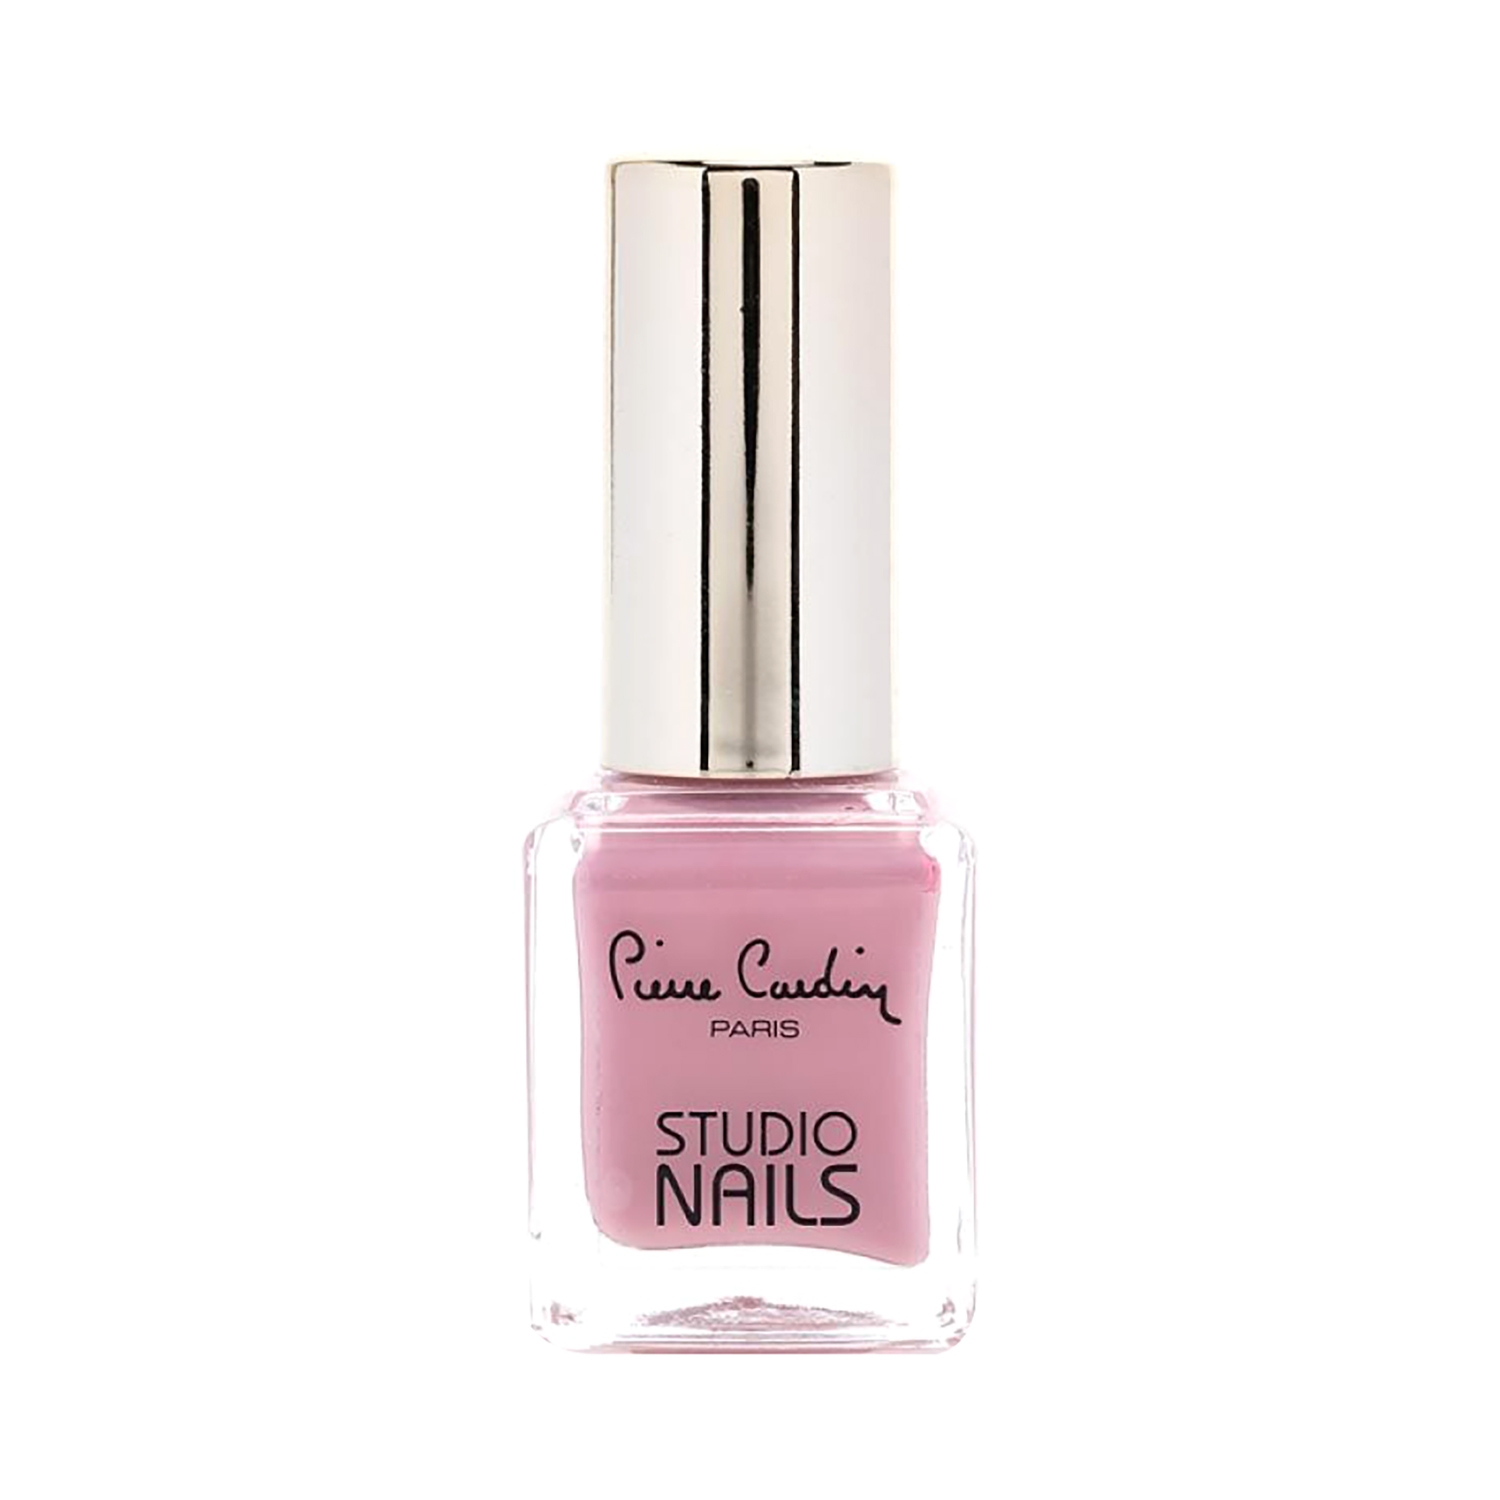 Pierre Cardin Paris | Pierre Cardin Paris Studio Nails - 19-Nude Bluish Pink (11.5ml)